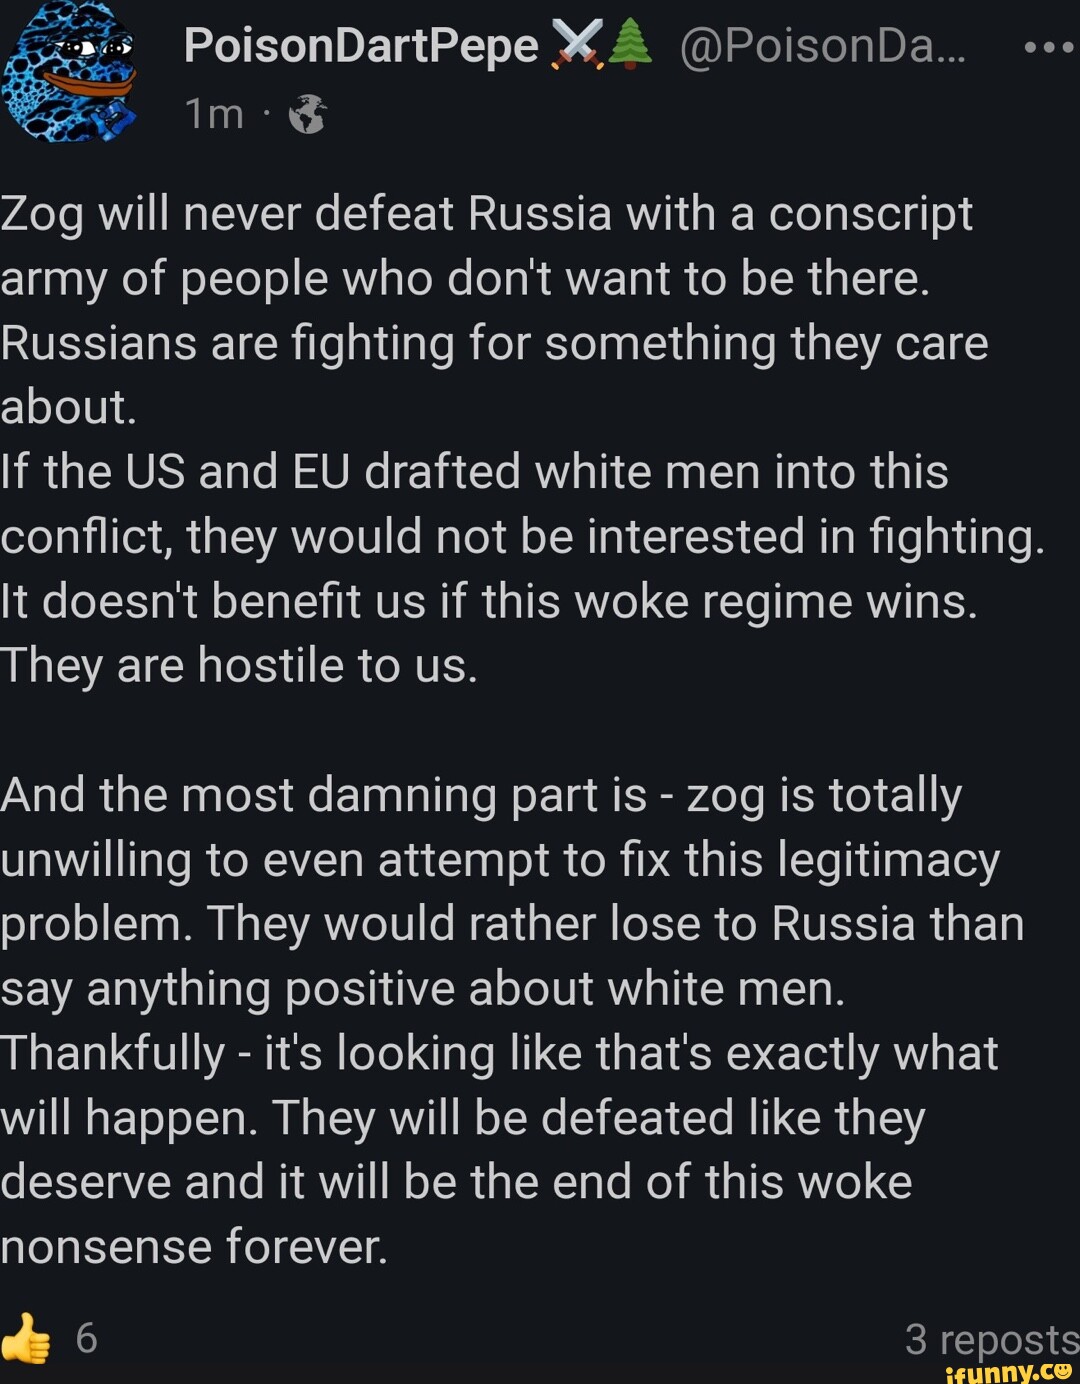 PoisonDartPepe @PoisonDa... Zog will never defeat Russia with a ...